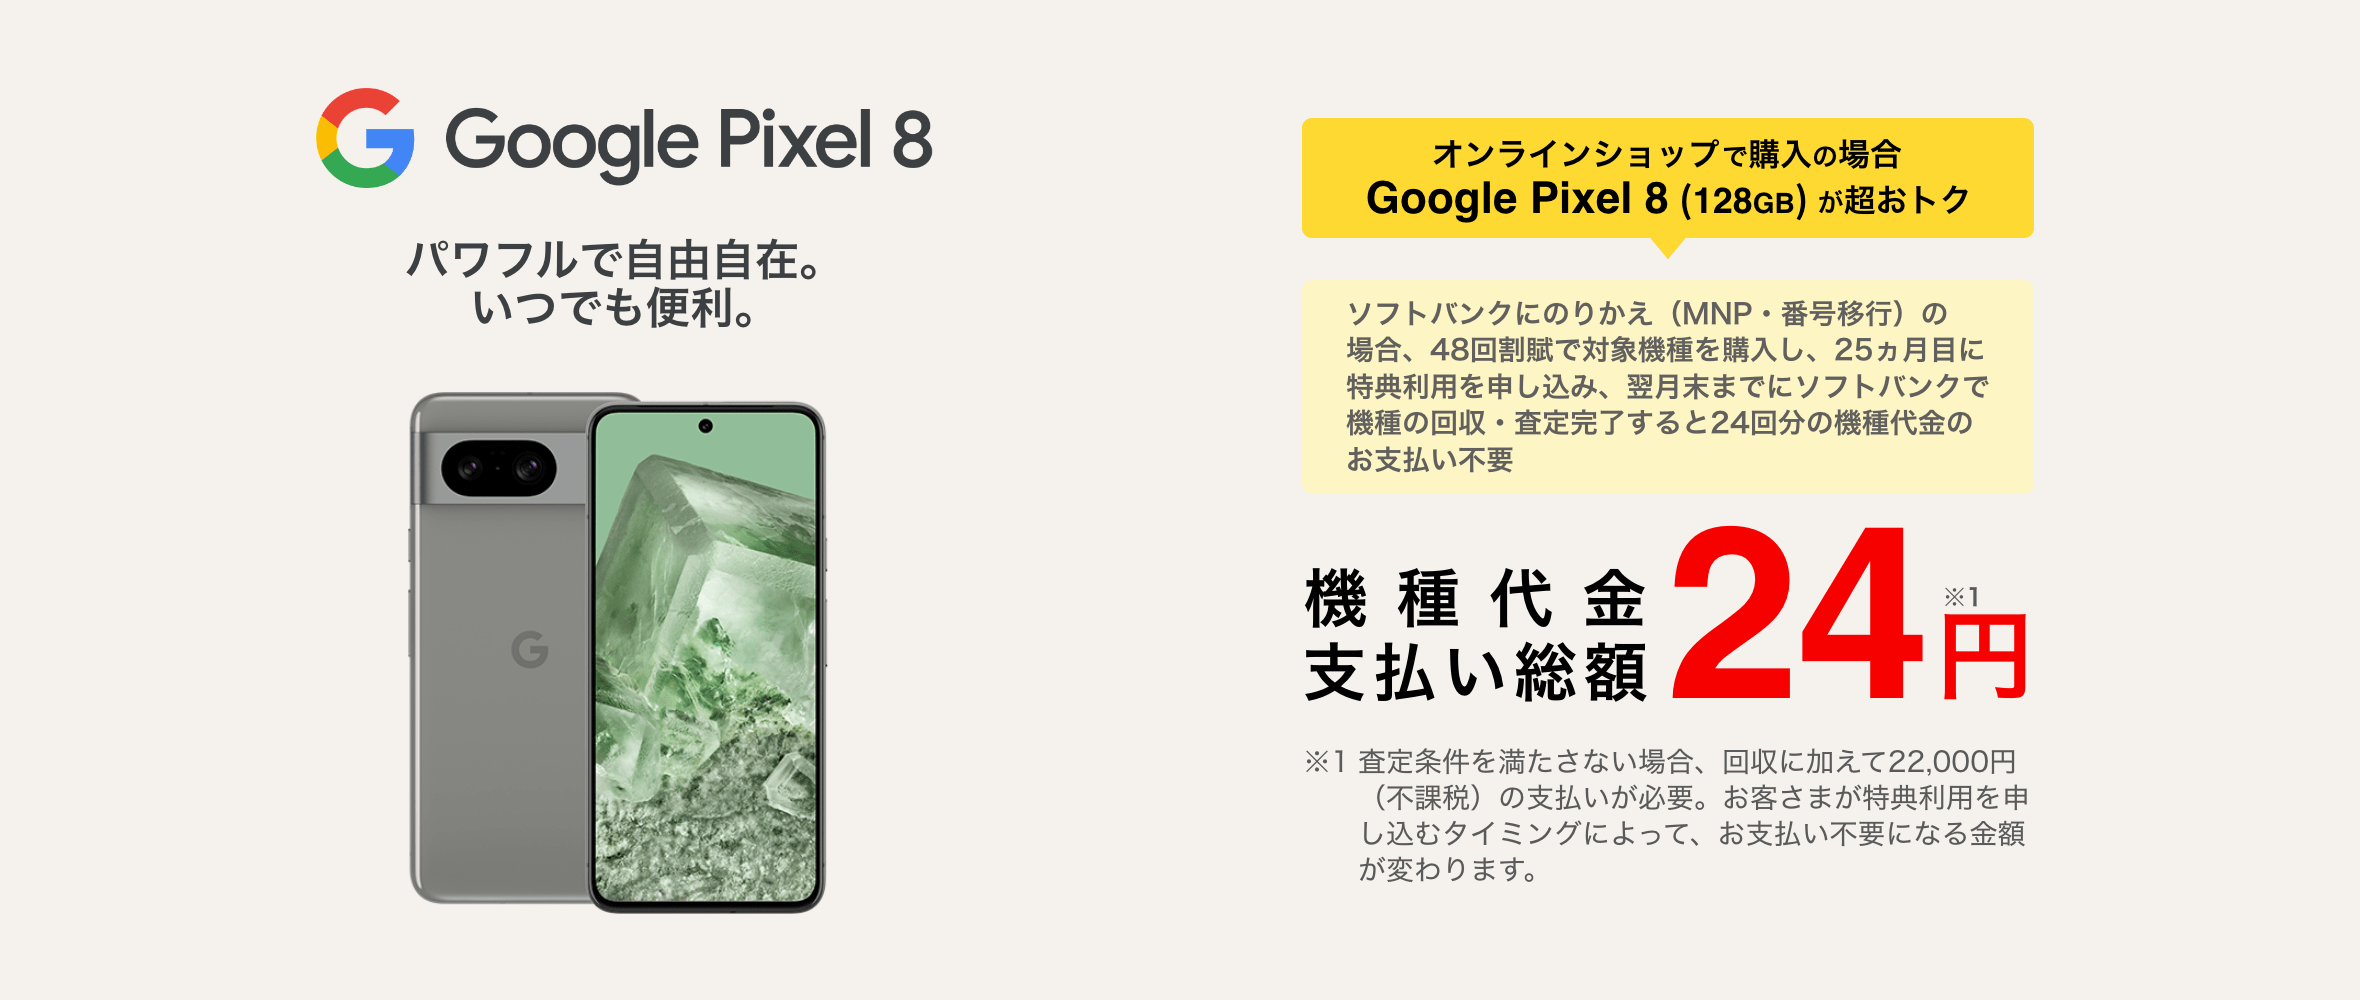 Google Pixel 7a登場